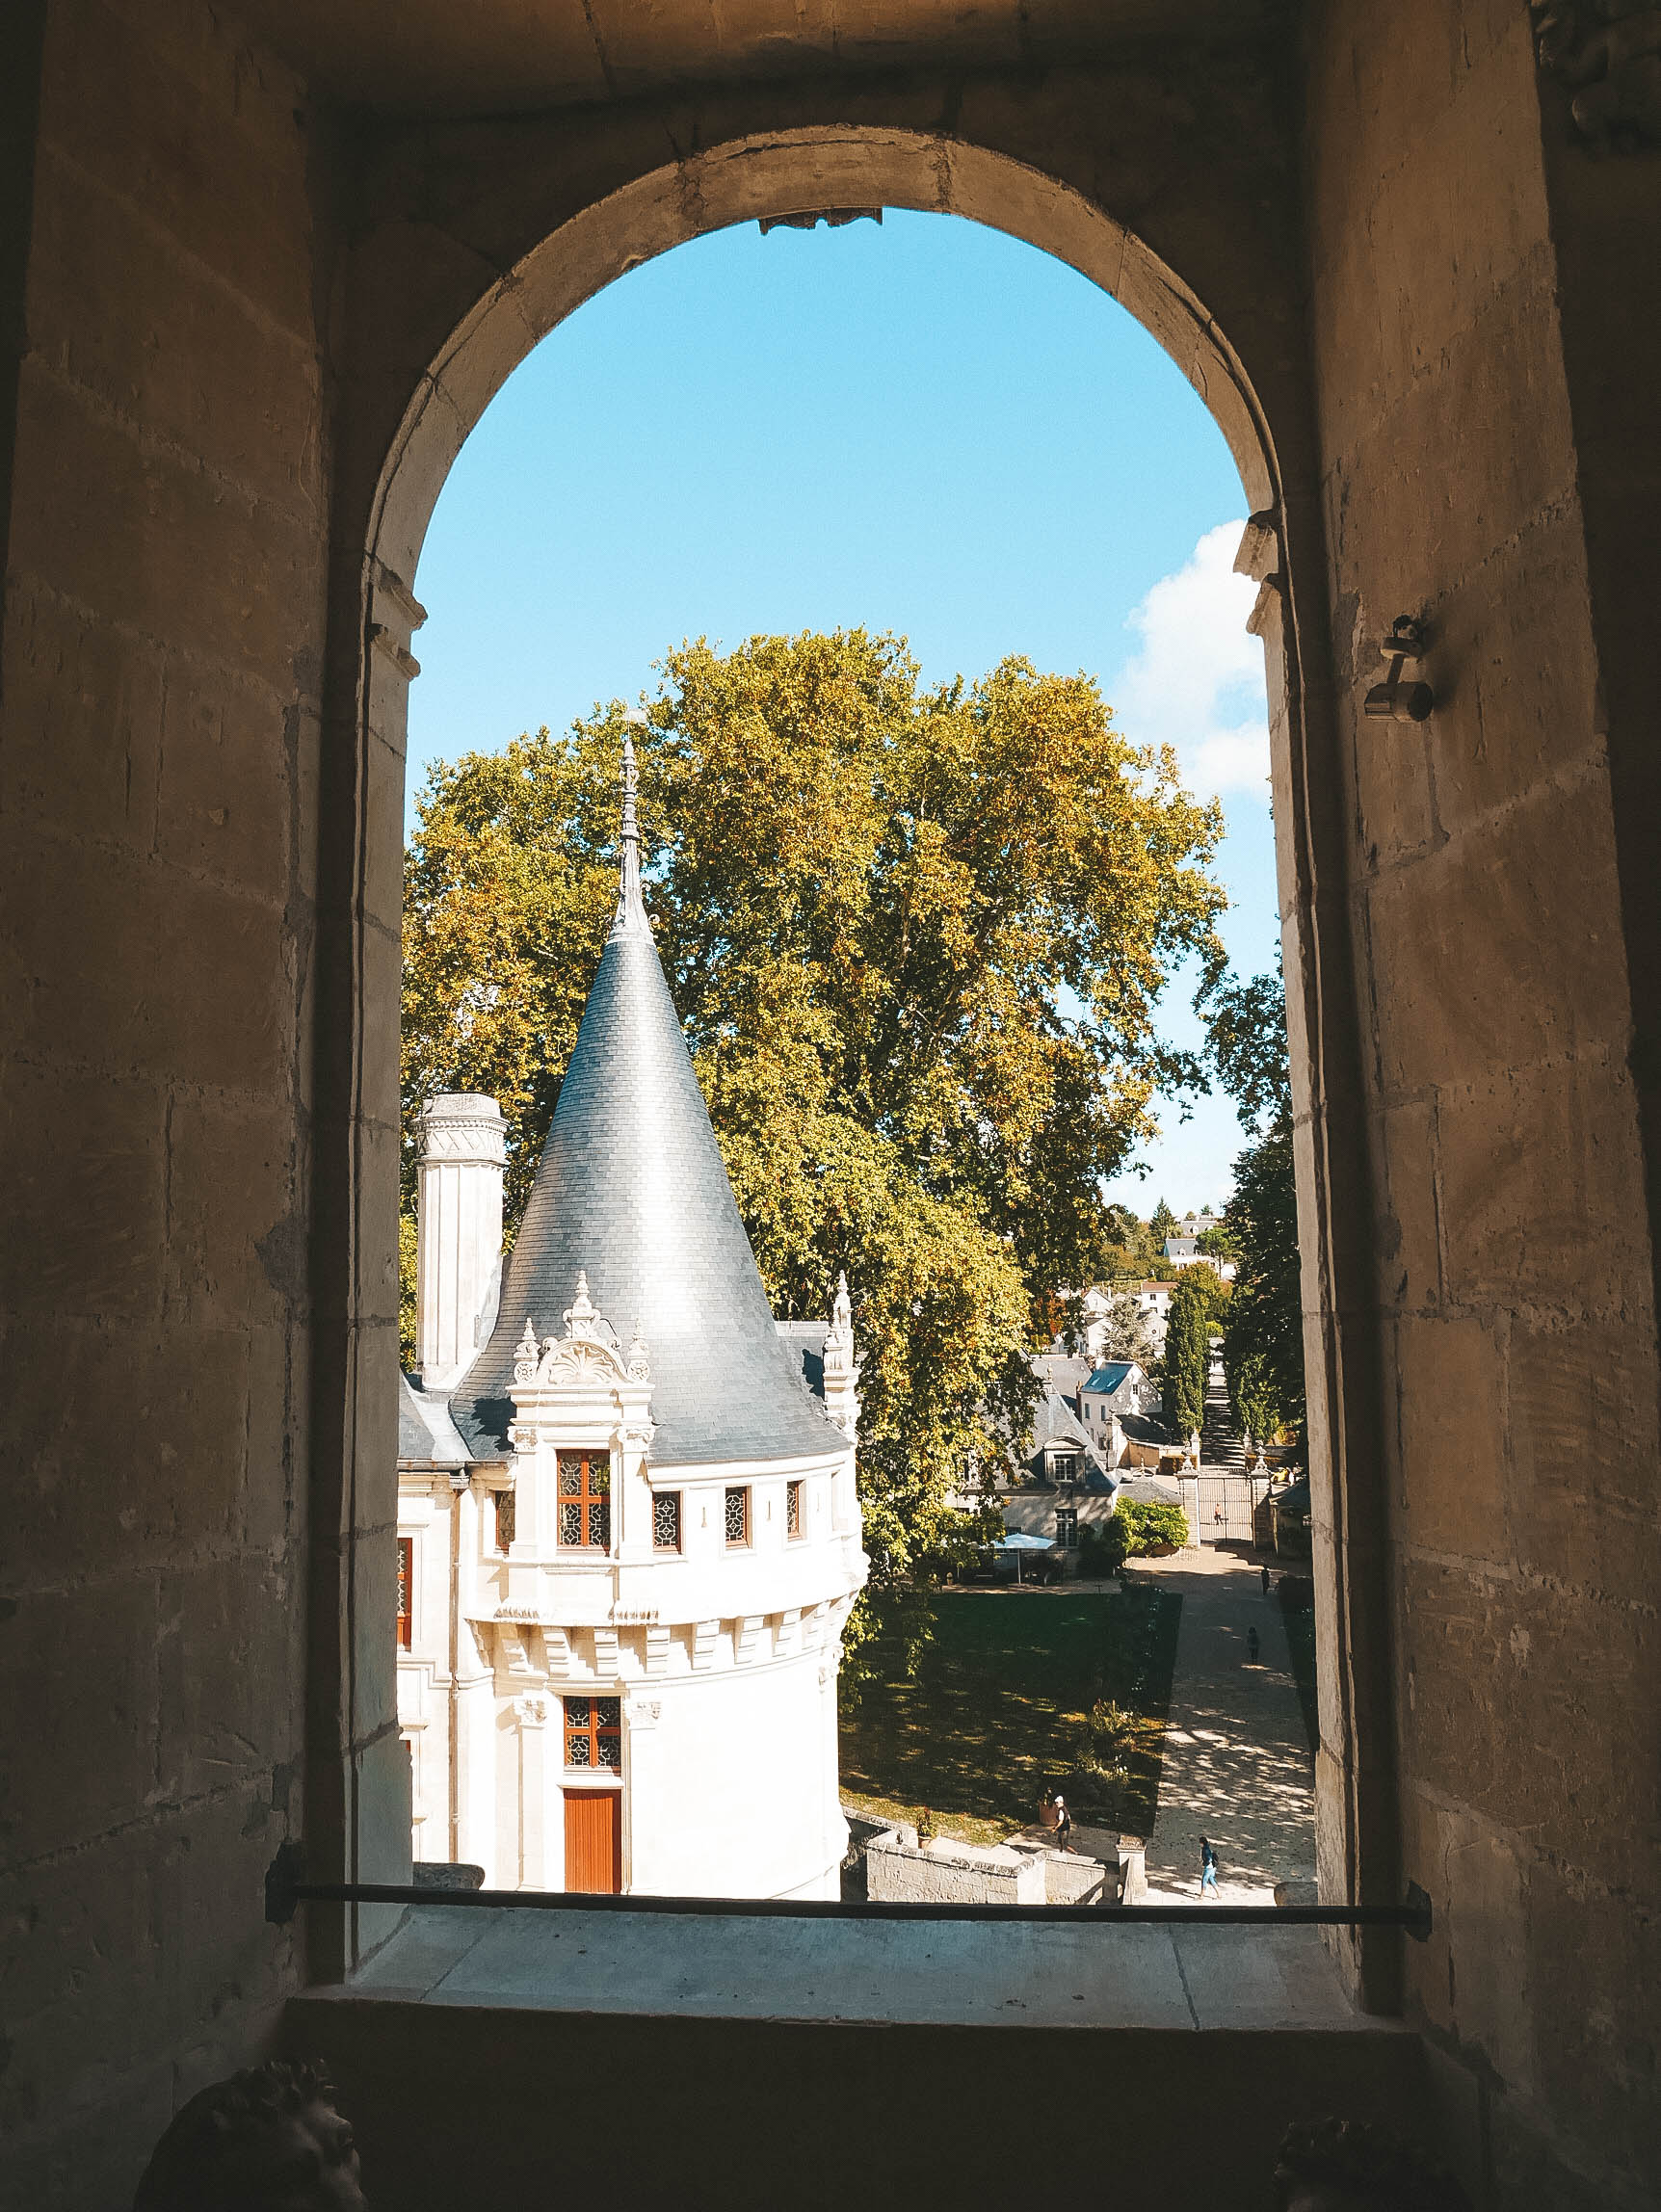 Through the window - Chateau d'Azay-le-Rideau - Loire Valley - France